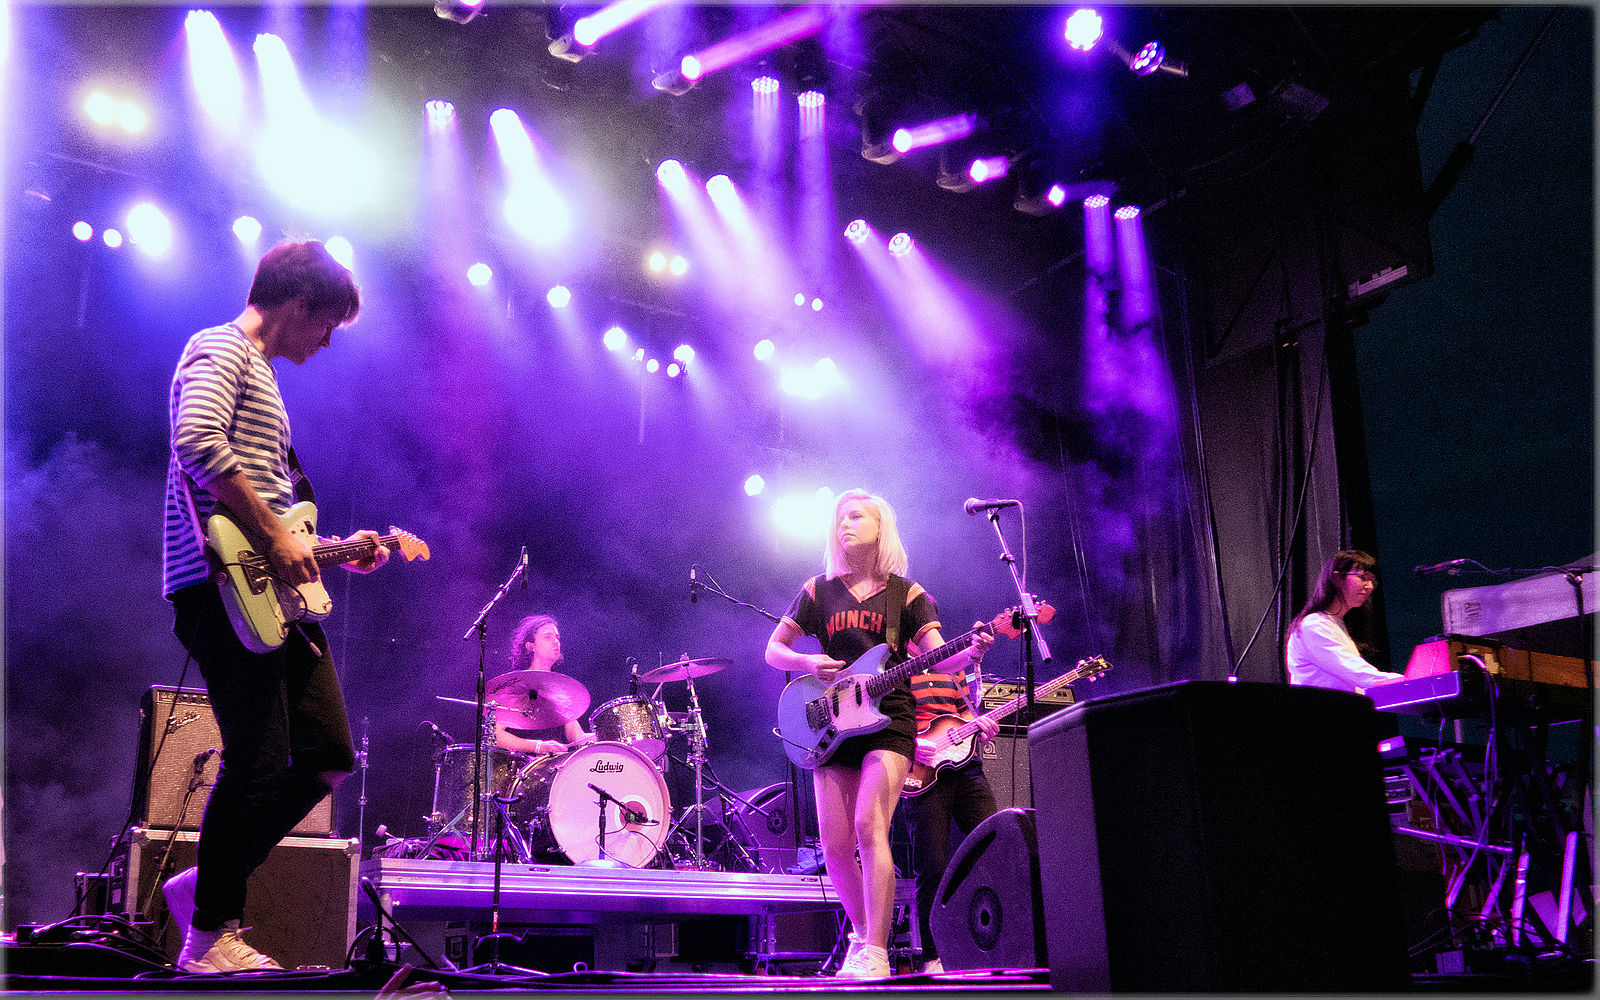 Alvvays play Sasquatch music festival in Washington, US, 2015. Pic via wikicommons (David Lee)